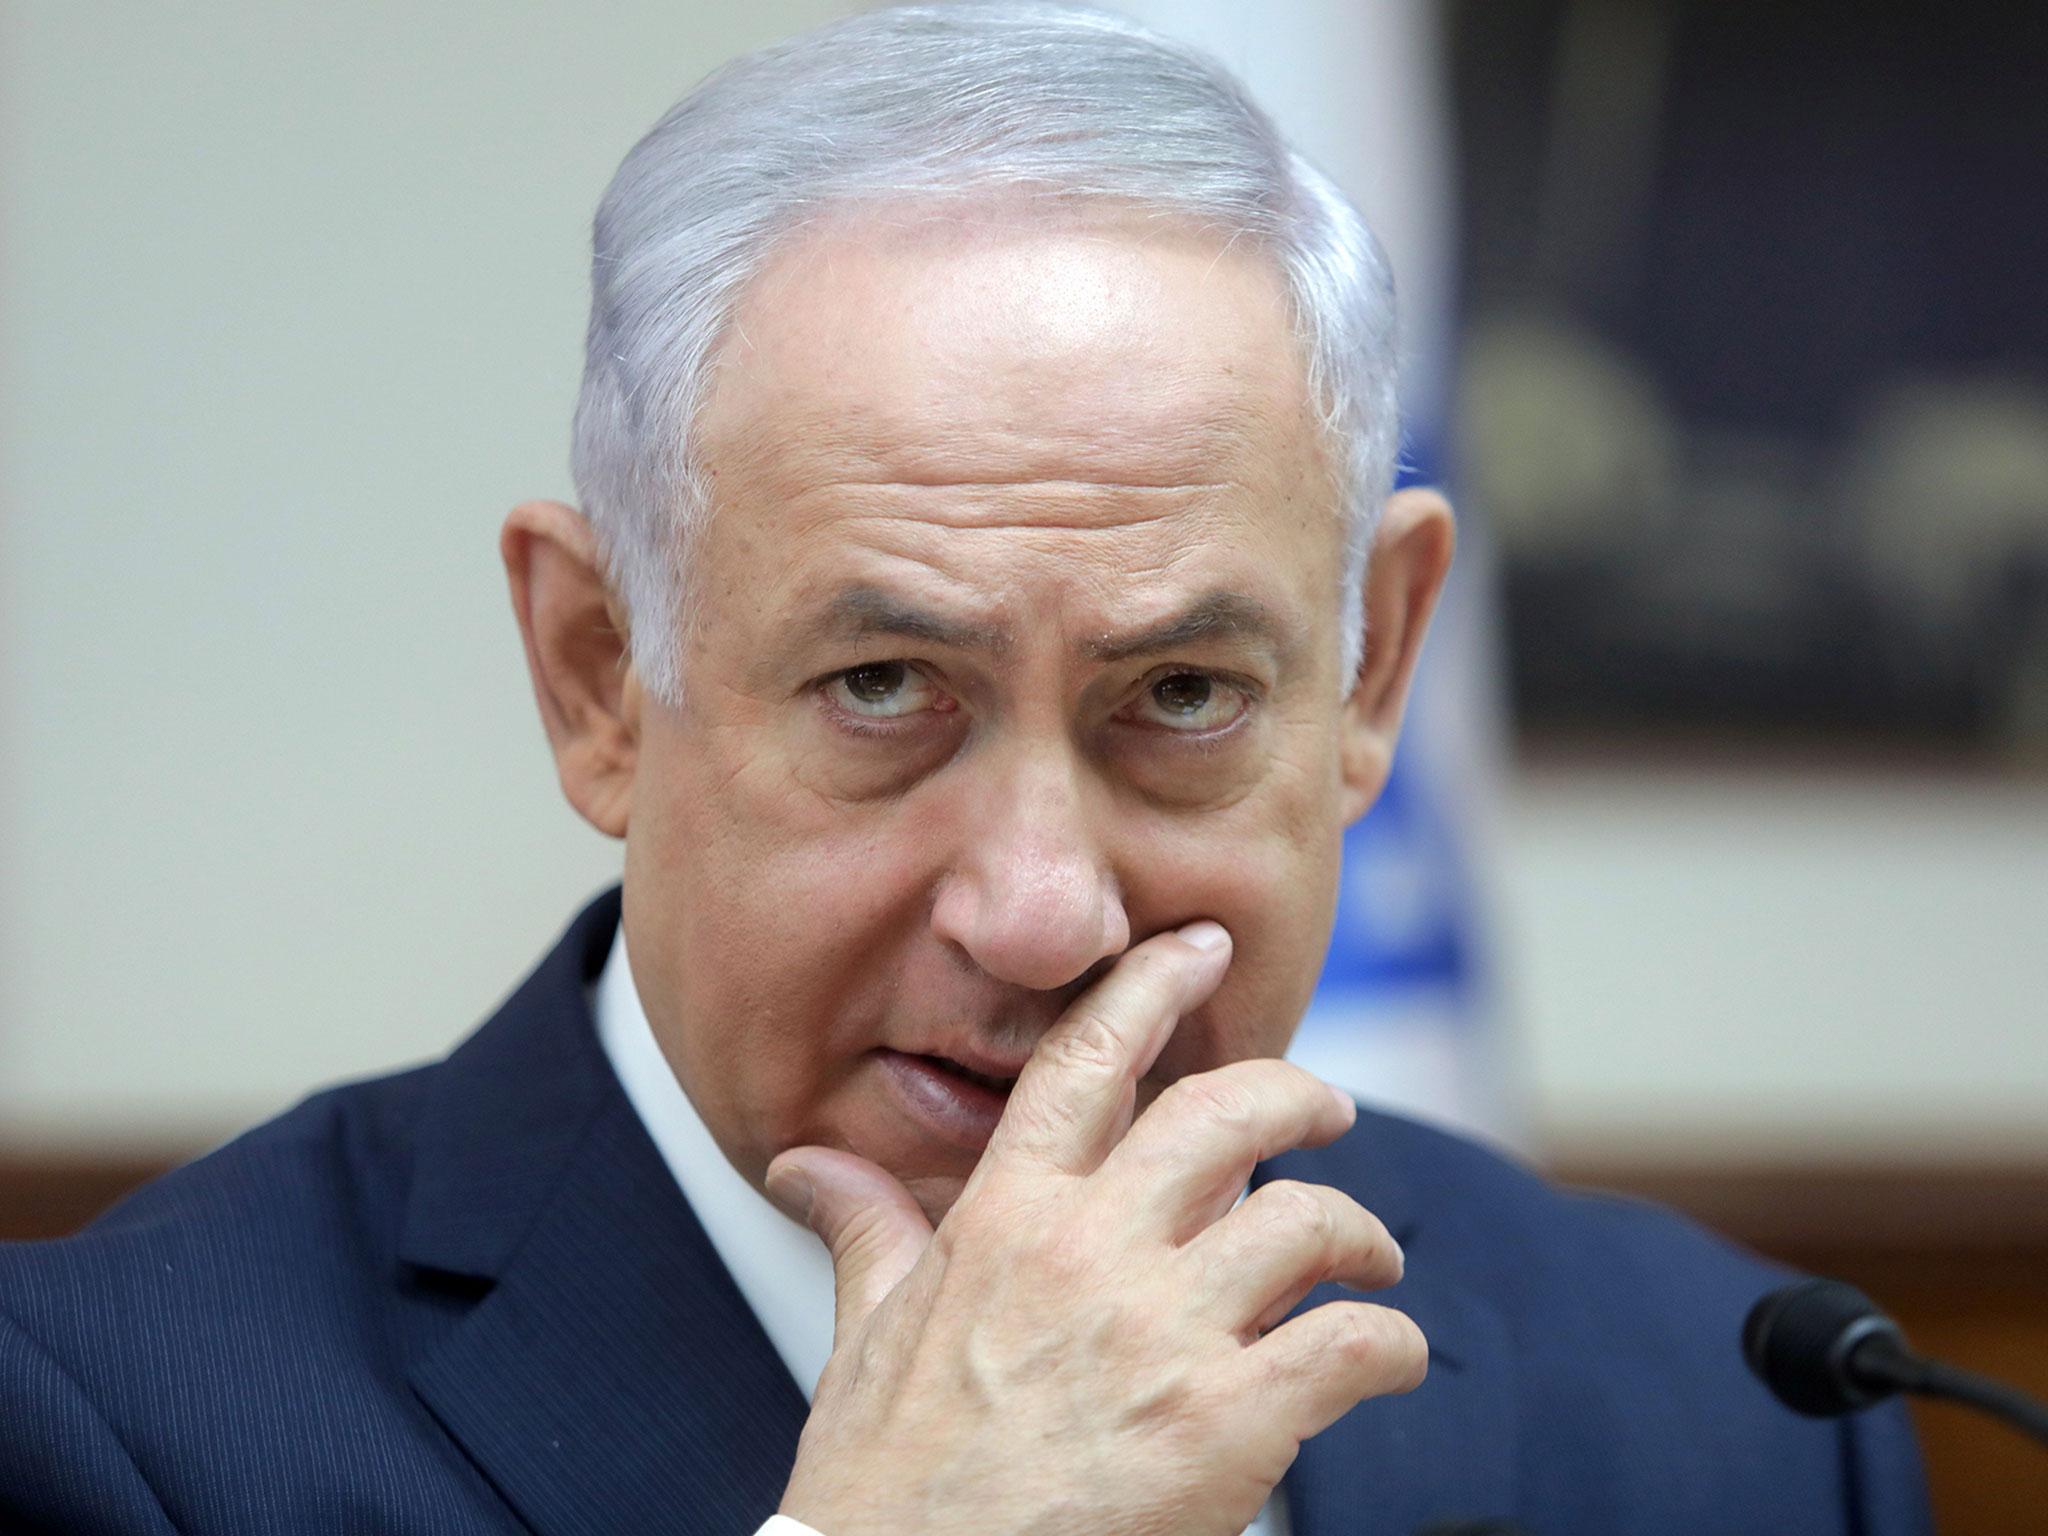 Israeli Prime Minister Benjamin Netanyahu has denied all allegations of wrongdoing